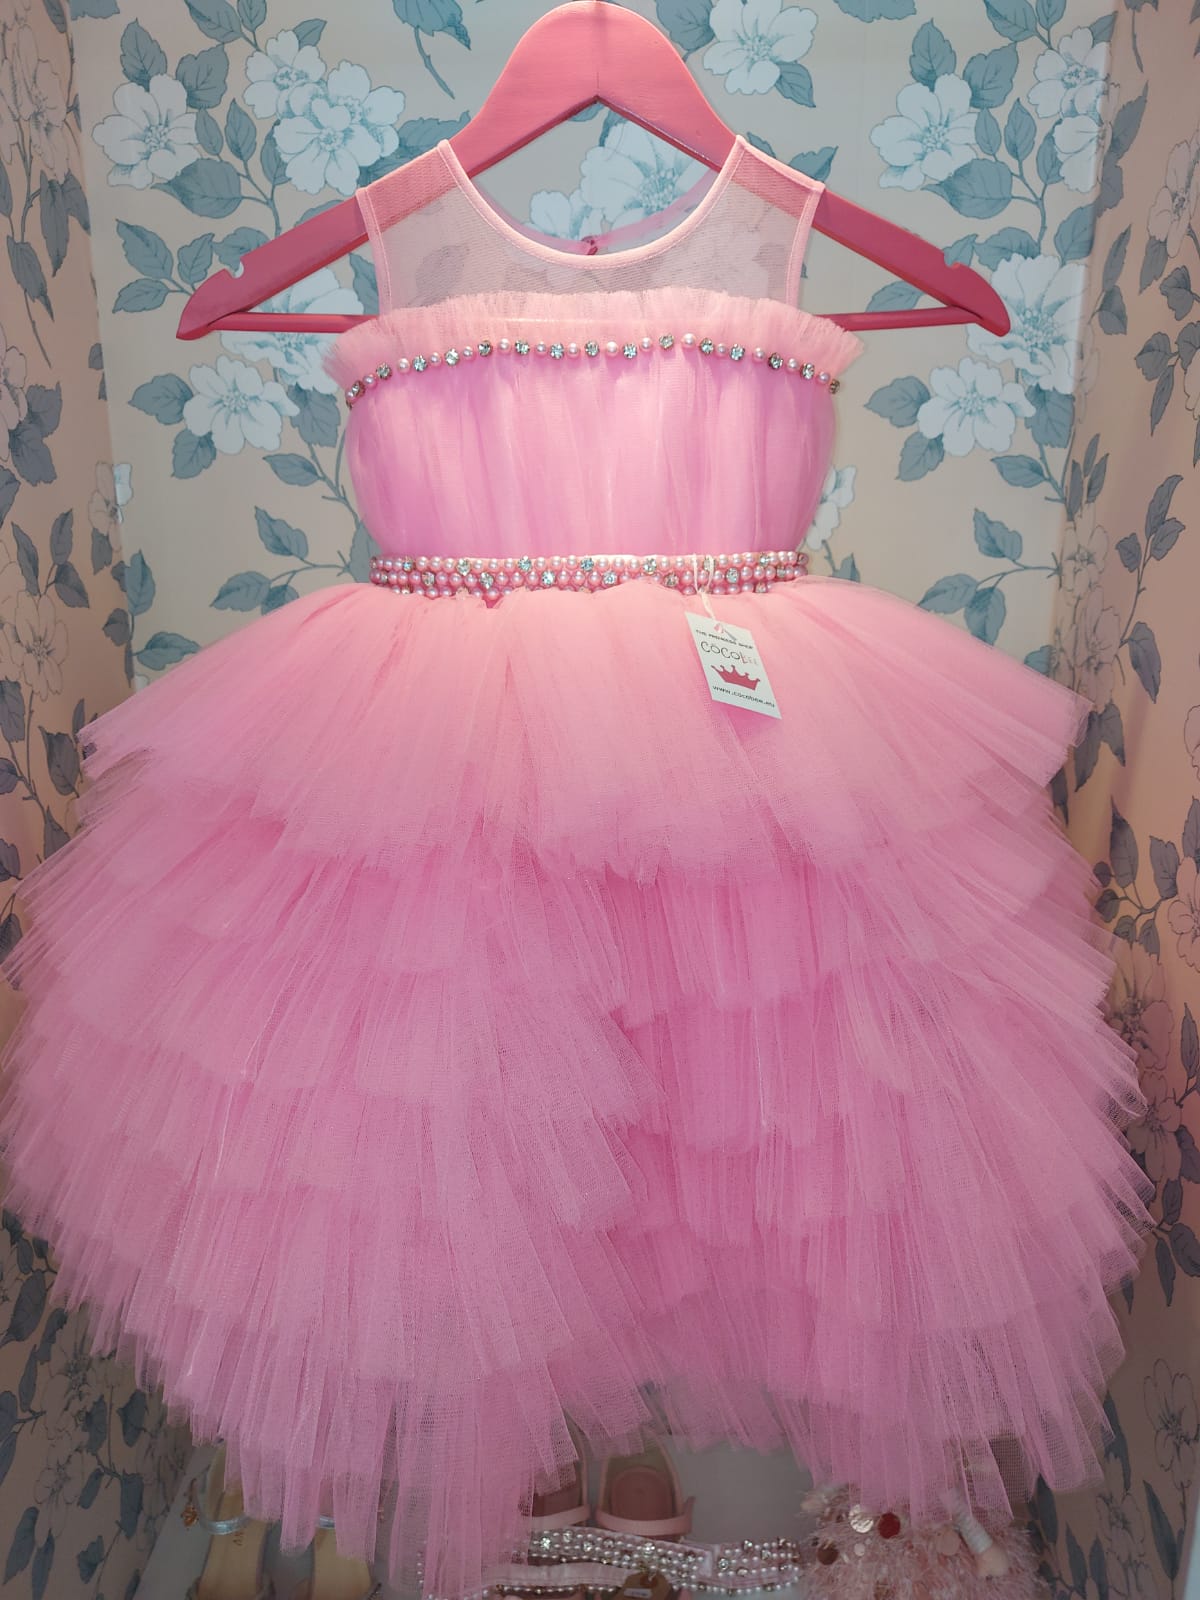 Candy Color Princess Dress CocoBee Shop Limassol 2